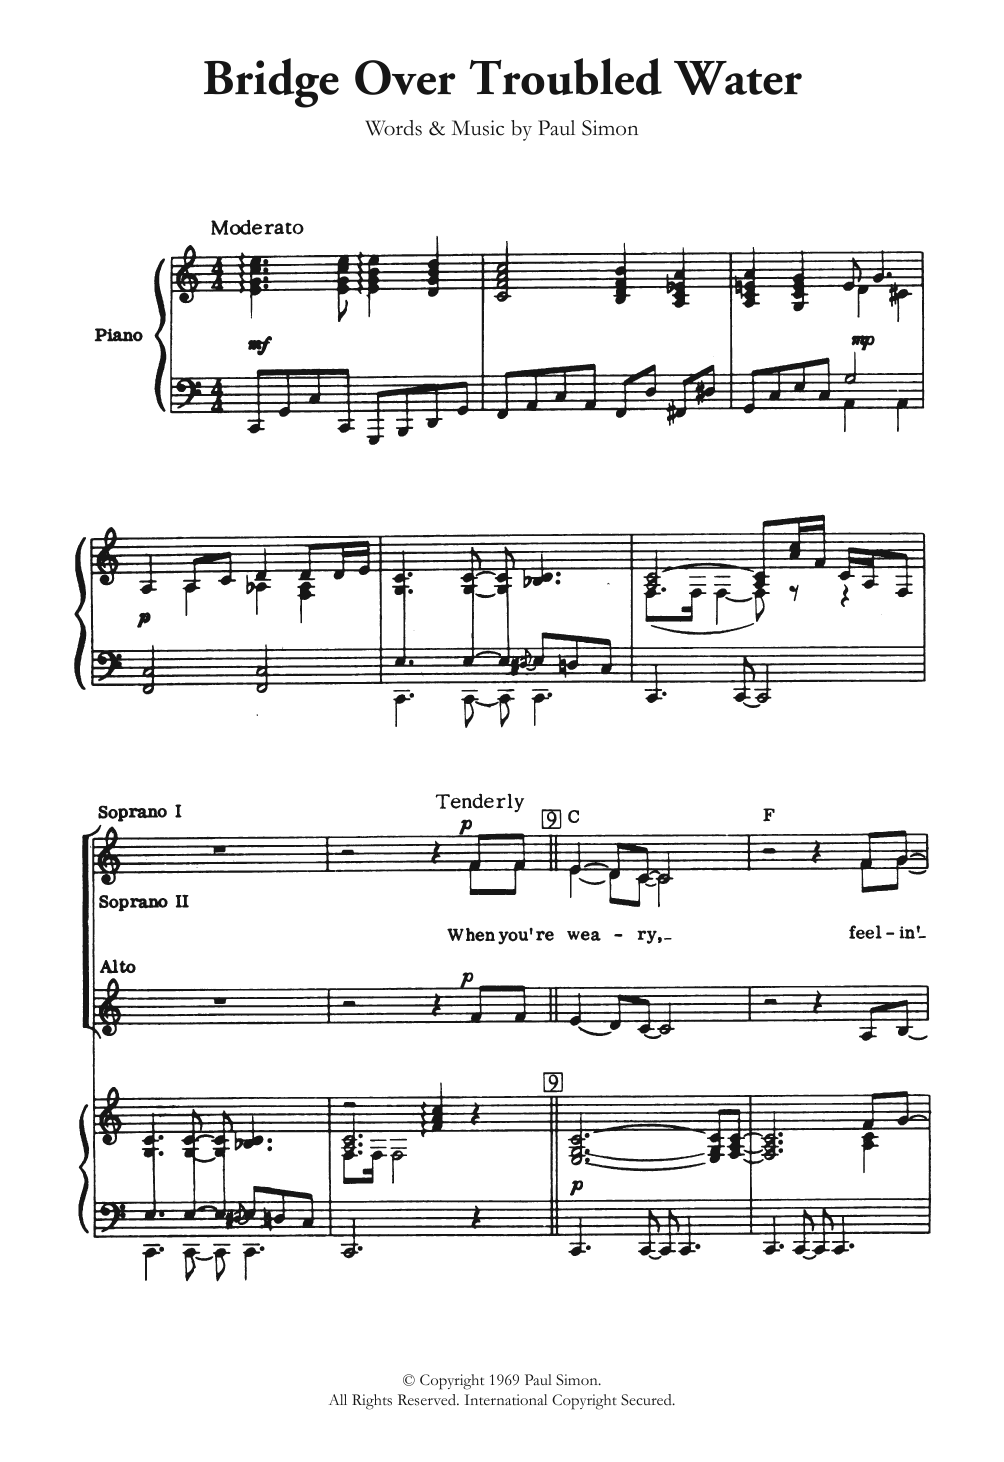 Simon & Garfunkel Bridge Over Troubled Water (arr. Berty Rice) Sheet Music Notes & Chords for Choir - Download or Print PDF